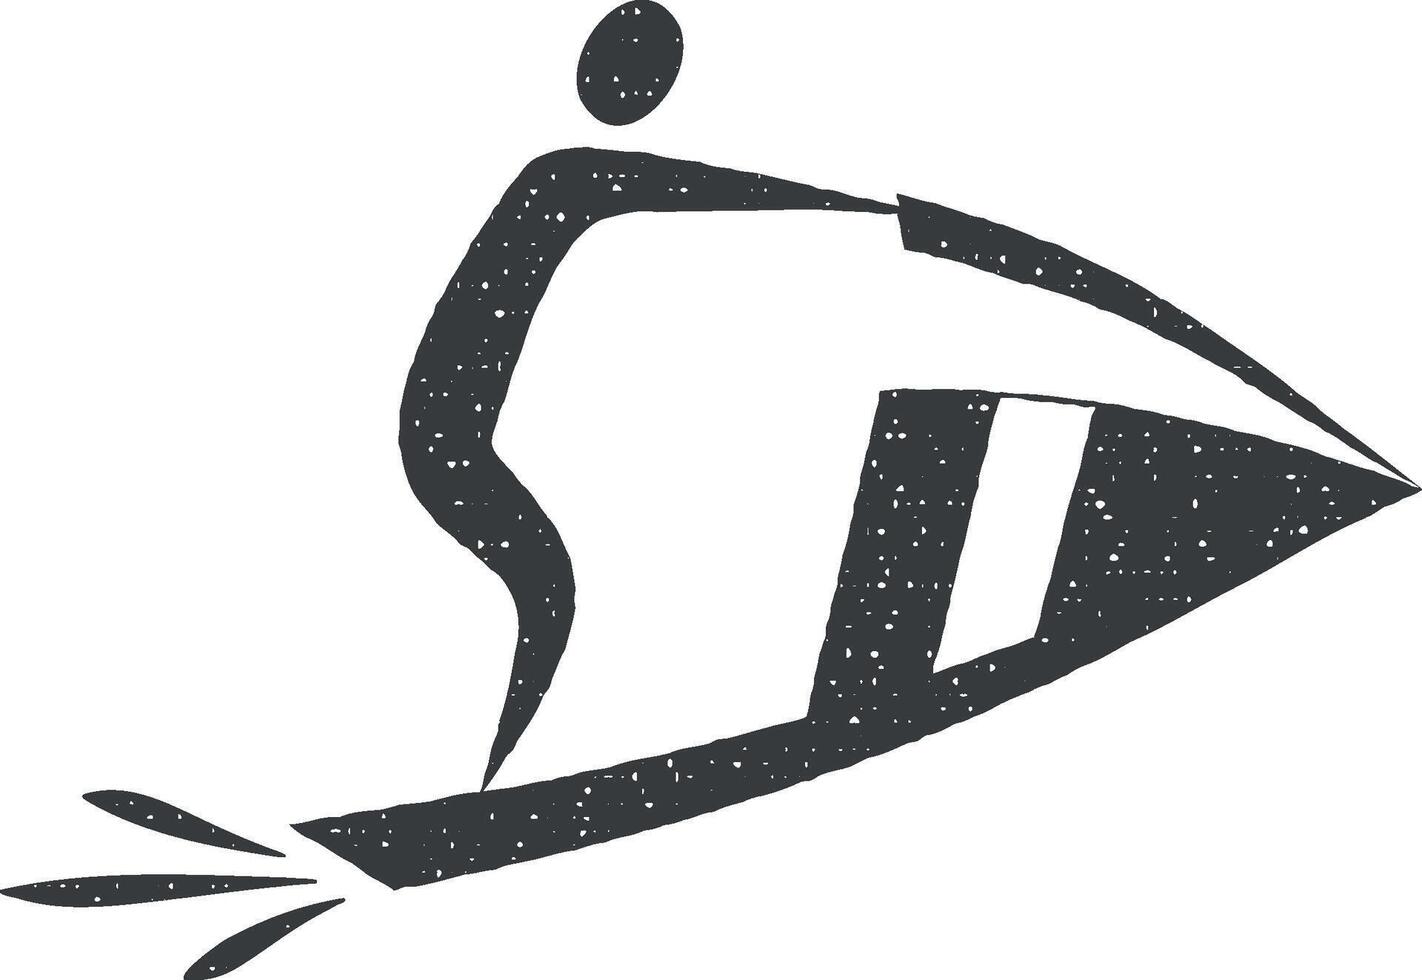 man on jet ski vector icon illustration with stamp effect